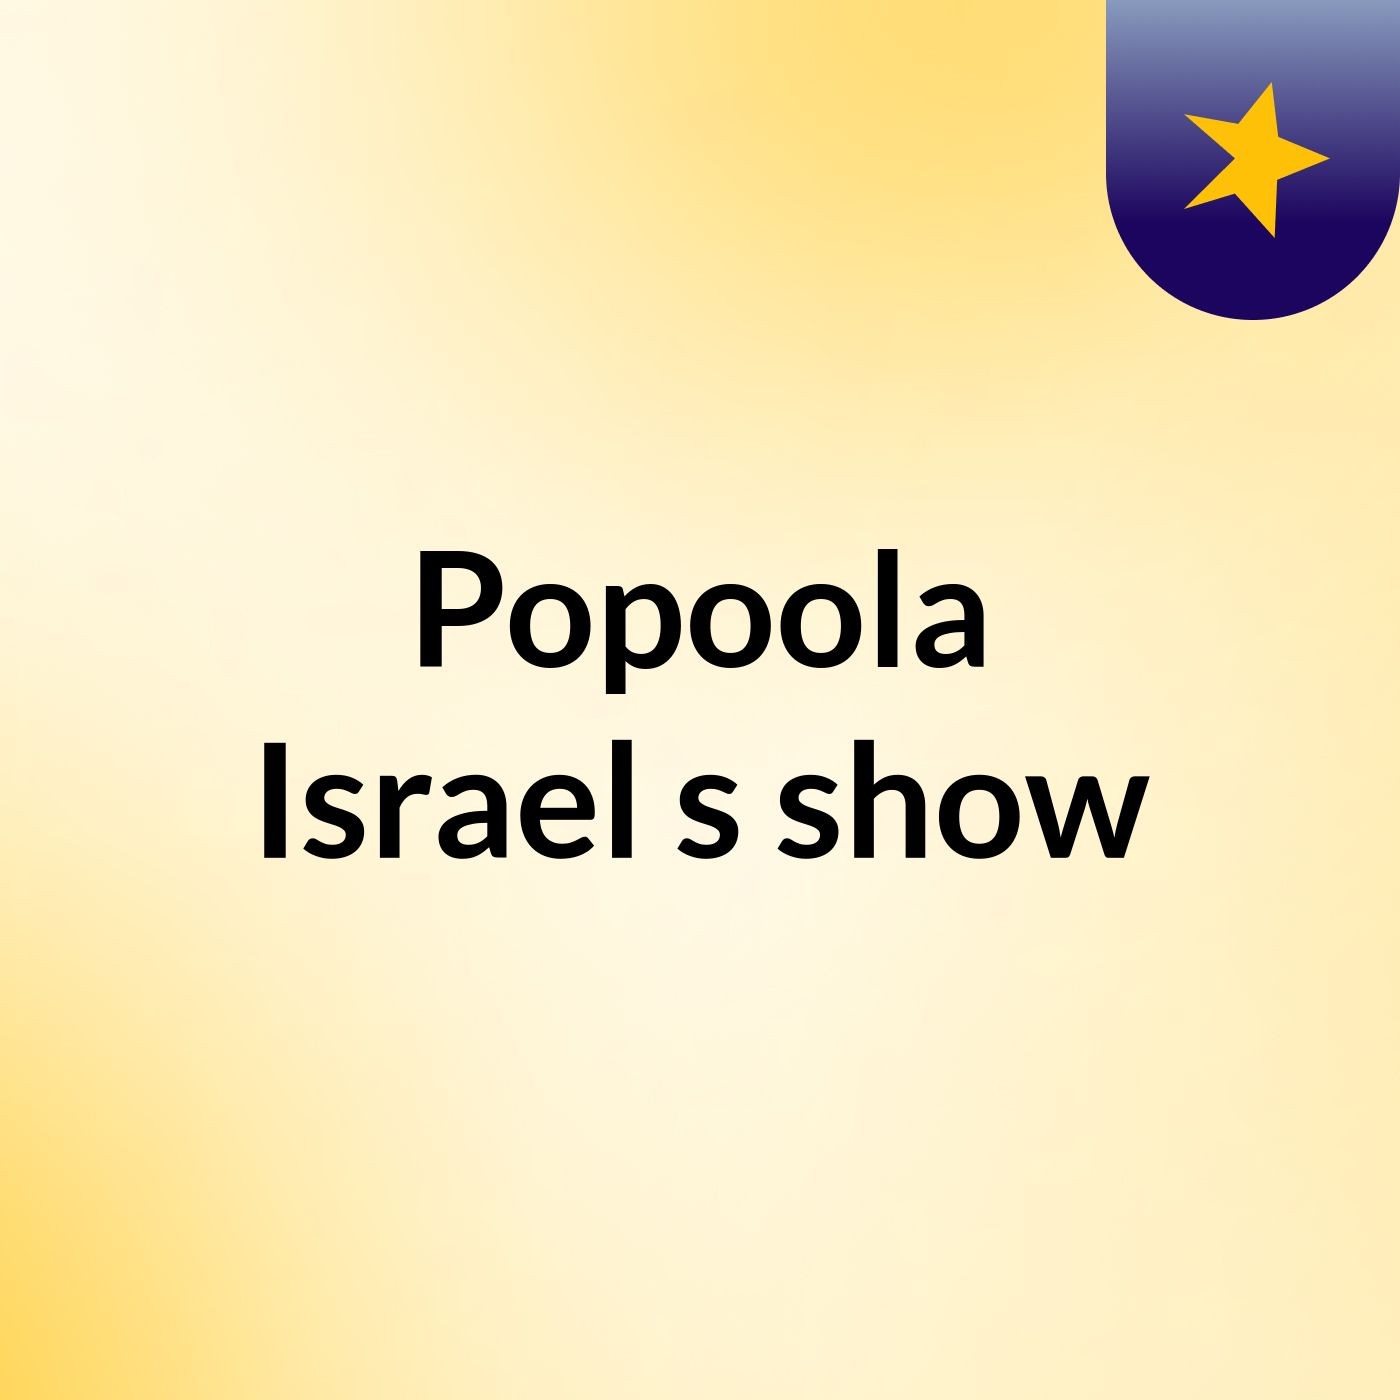 Popoola Israel's show